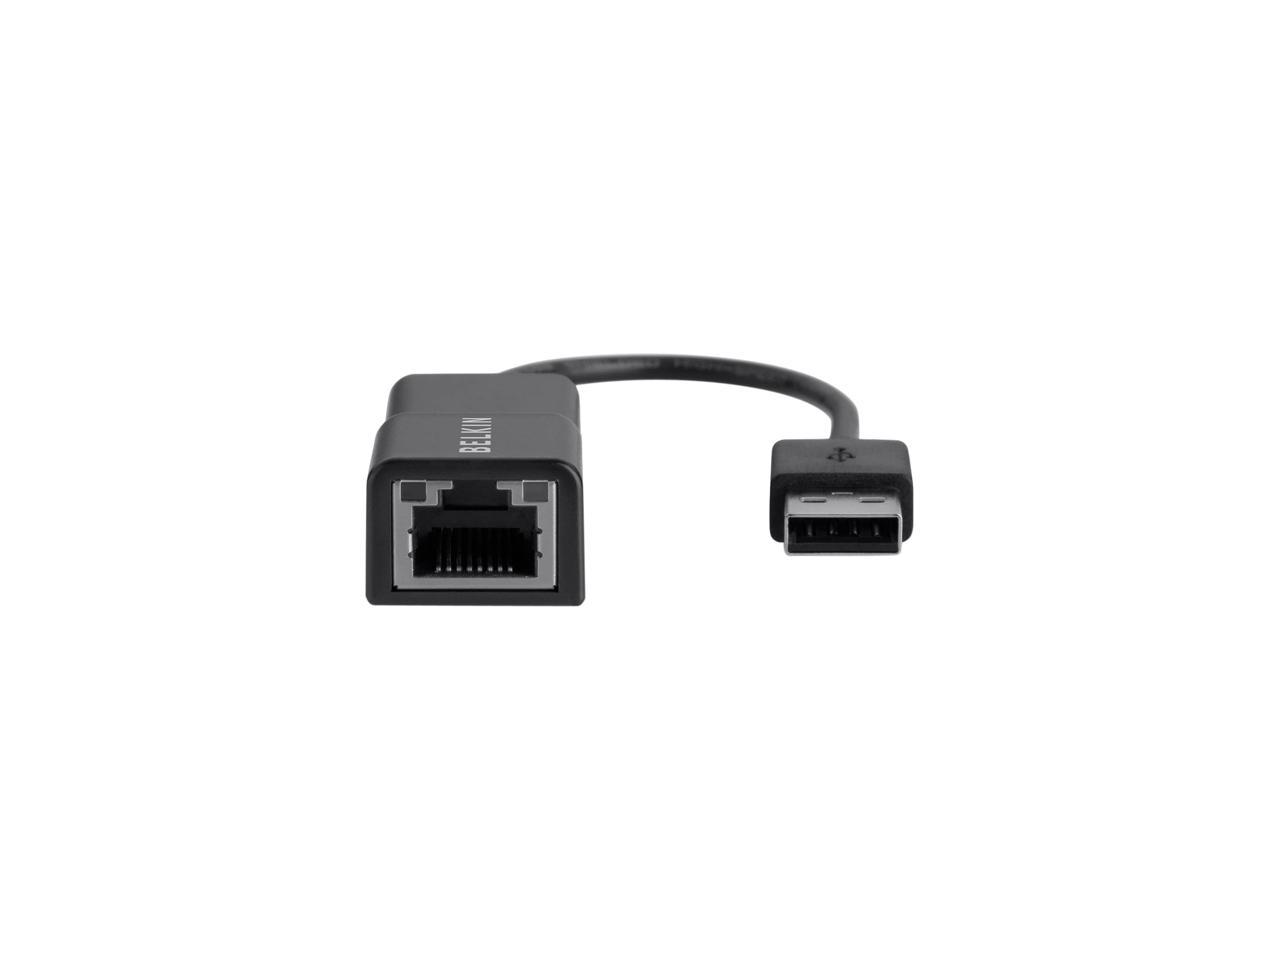 USB 2.0 ENET ADAPTER 10/100MBPS